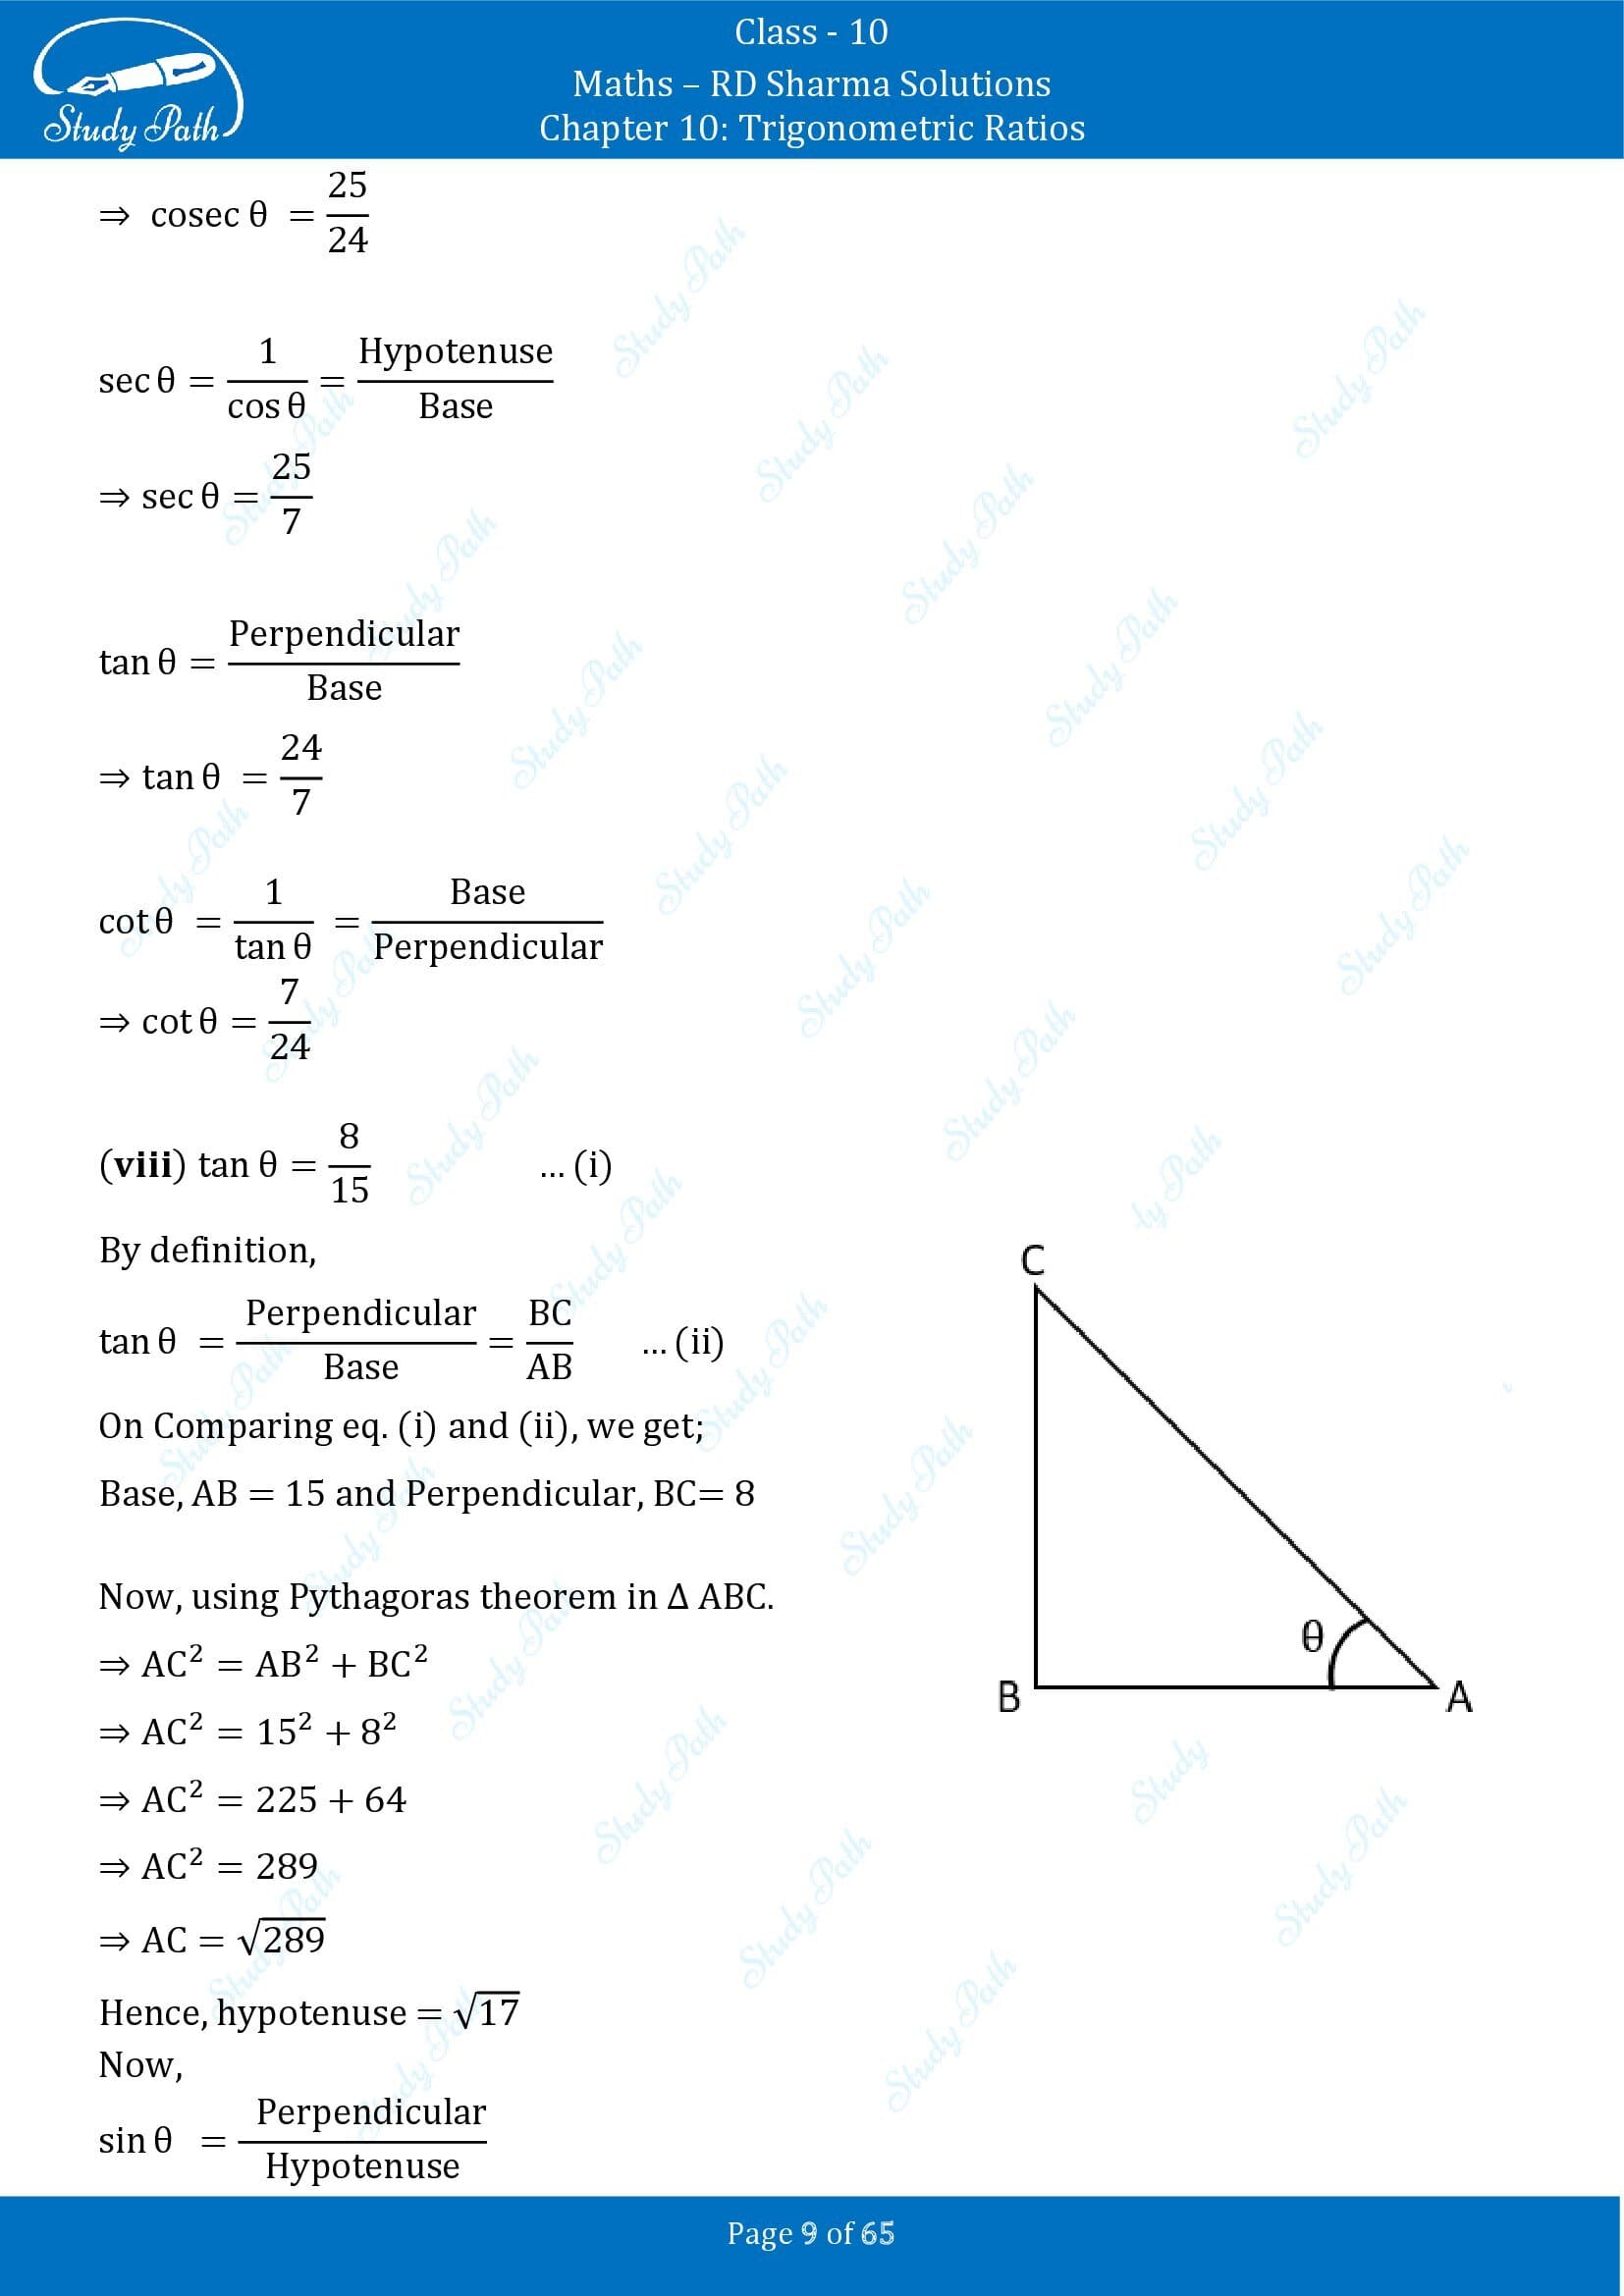 RD Sharma Solutions Class 10 Chapter 10 Trigonometric Ratios Exercise 10.1 00009